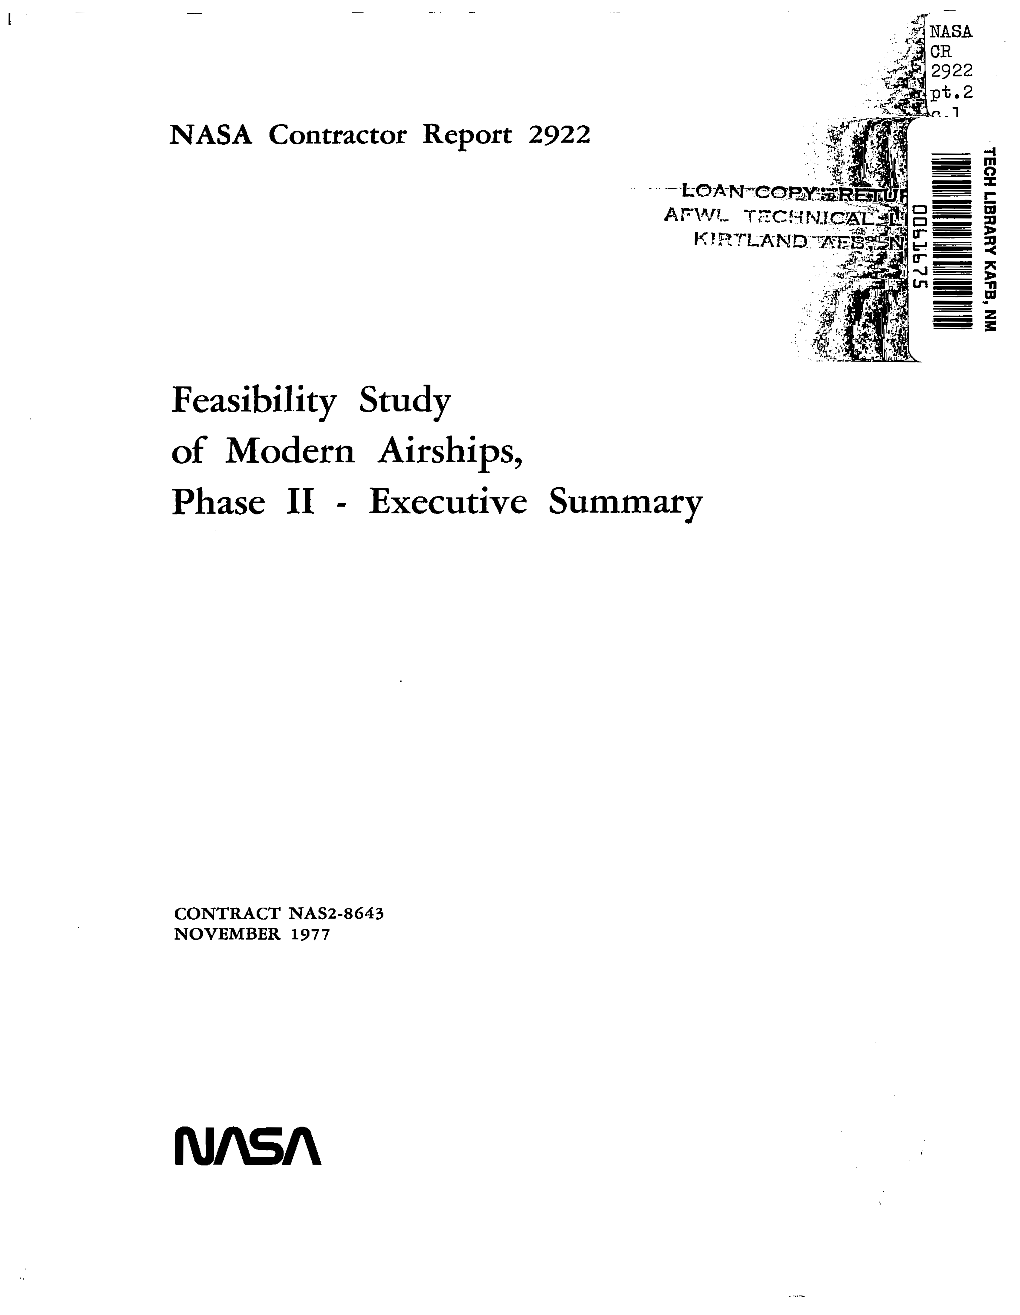 Feasibility Study of Modern Airships, Phase 11 - Executive Summary